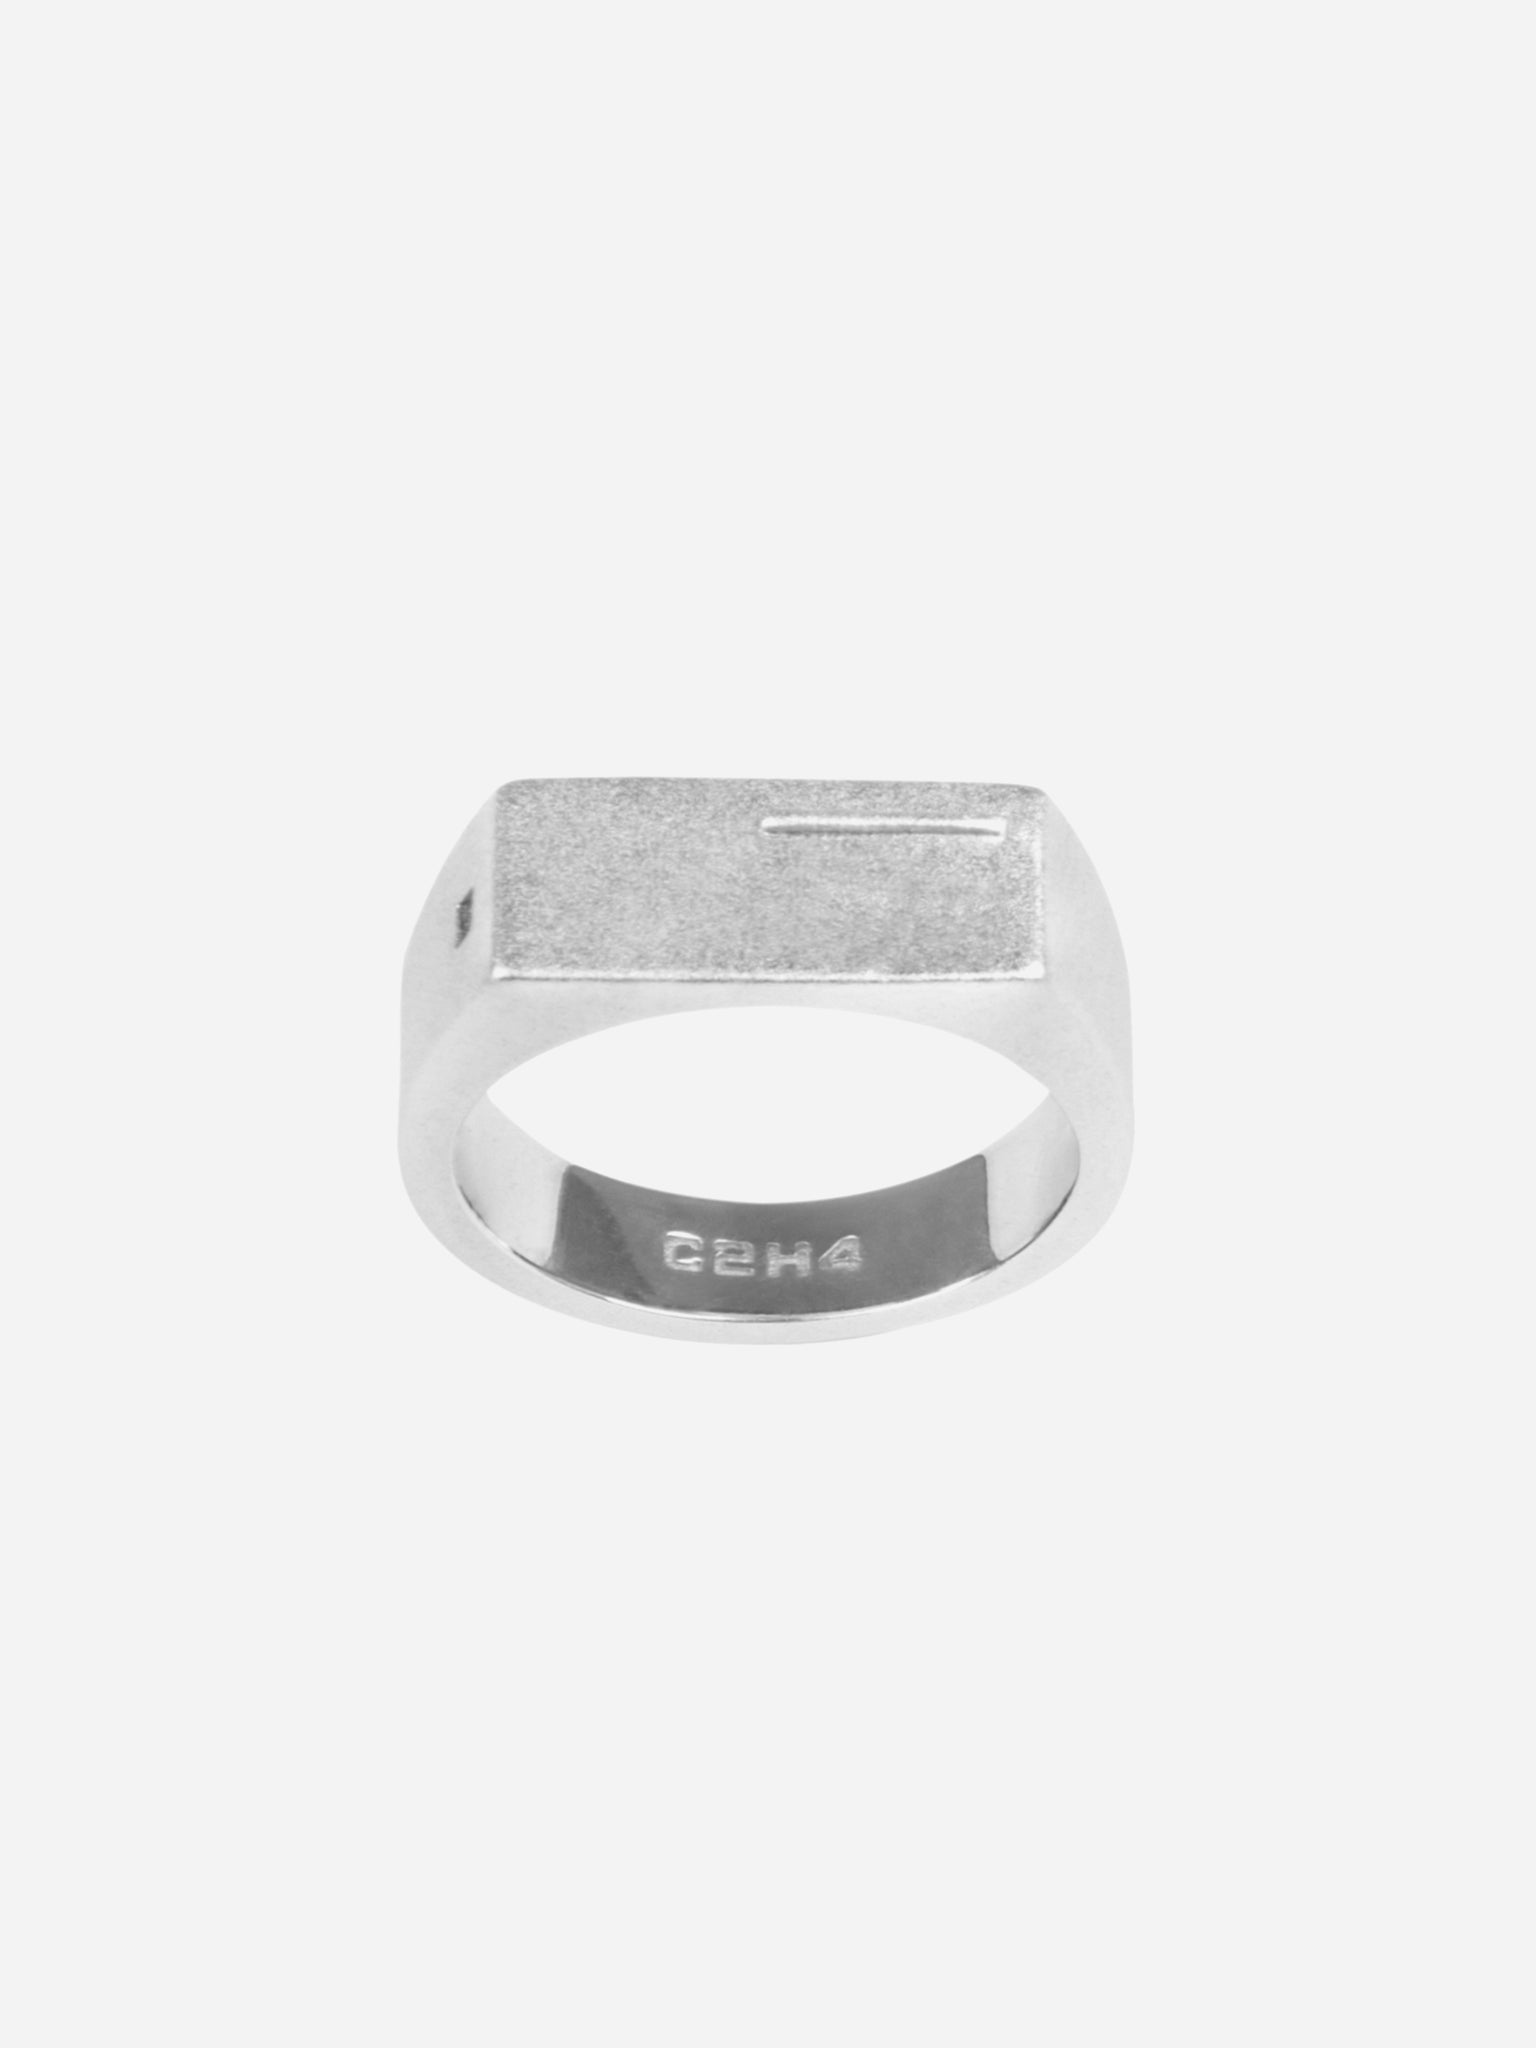 009 - Basics Square Ring - C2H4®